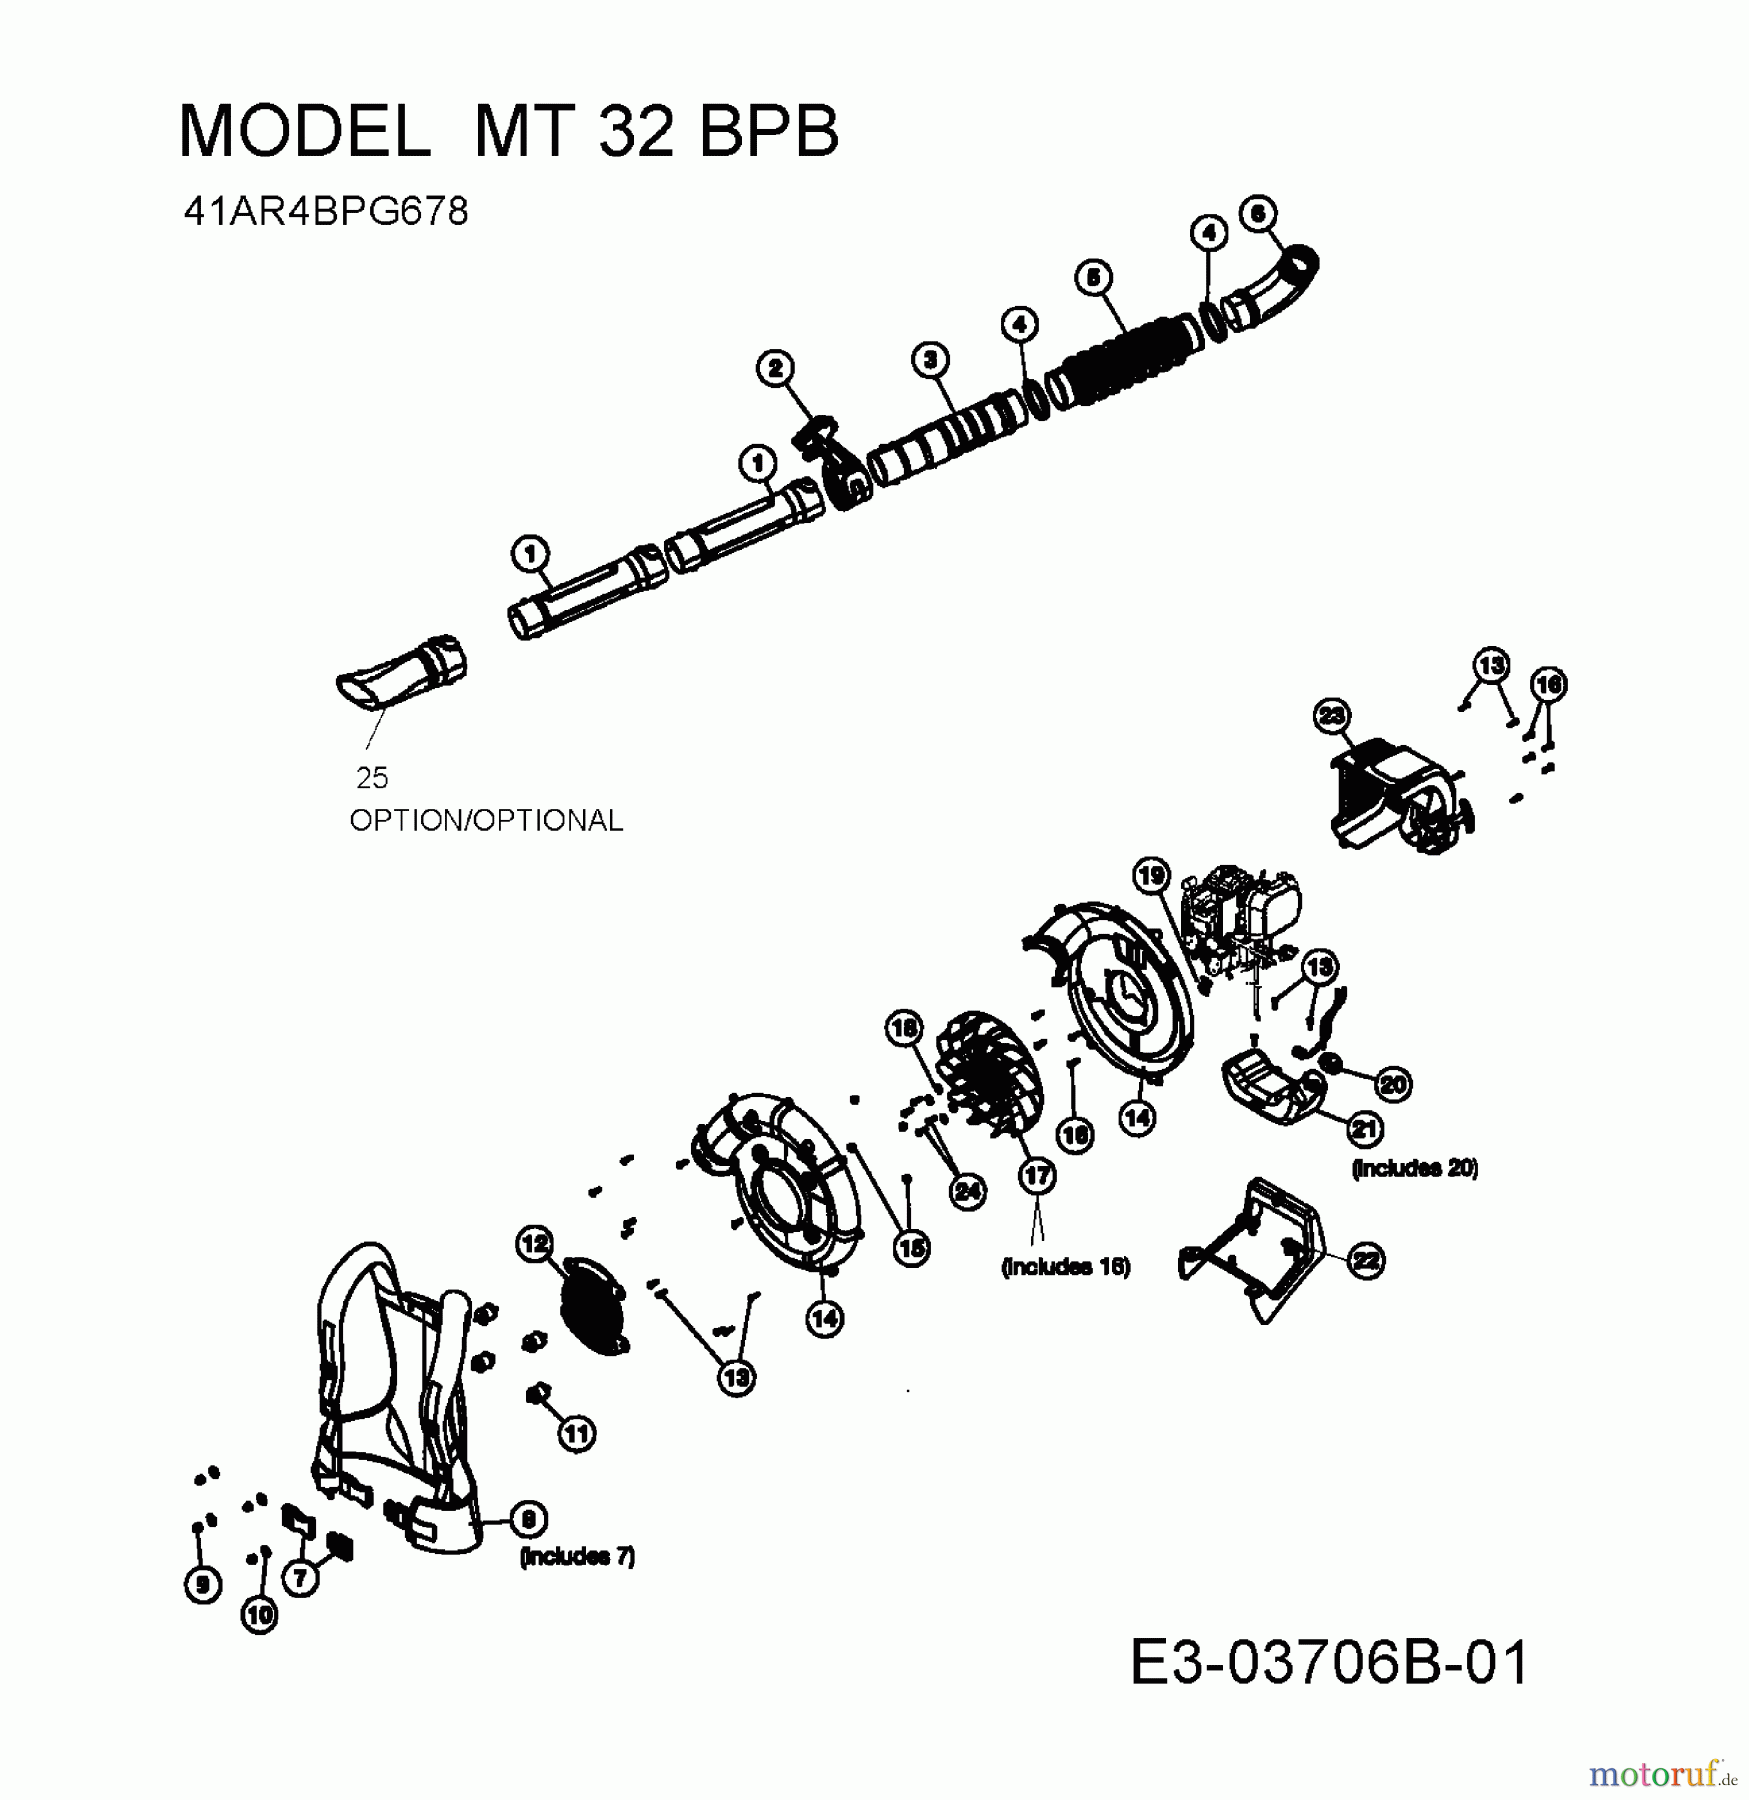  MTD Leaf blower, Blower vac MT 32 BPB 41AR4BPG678  (2010) Basic machine